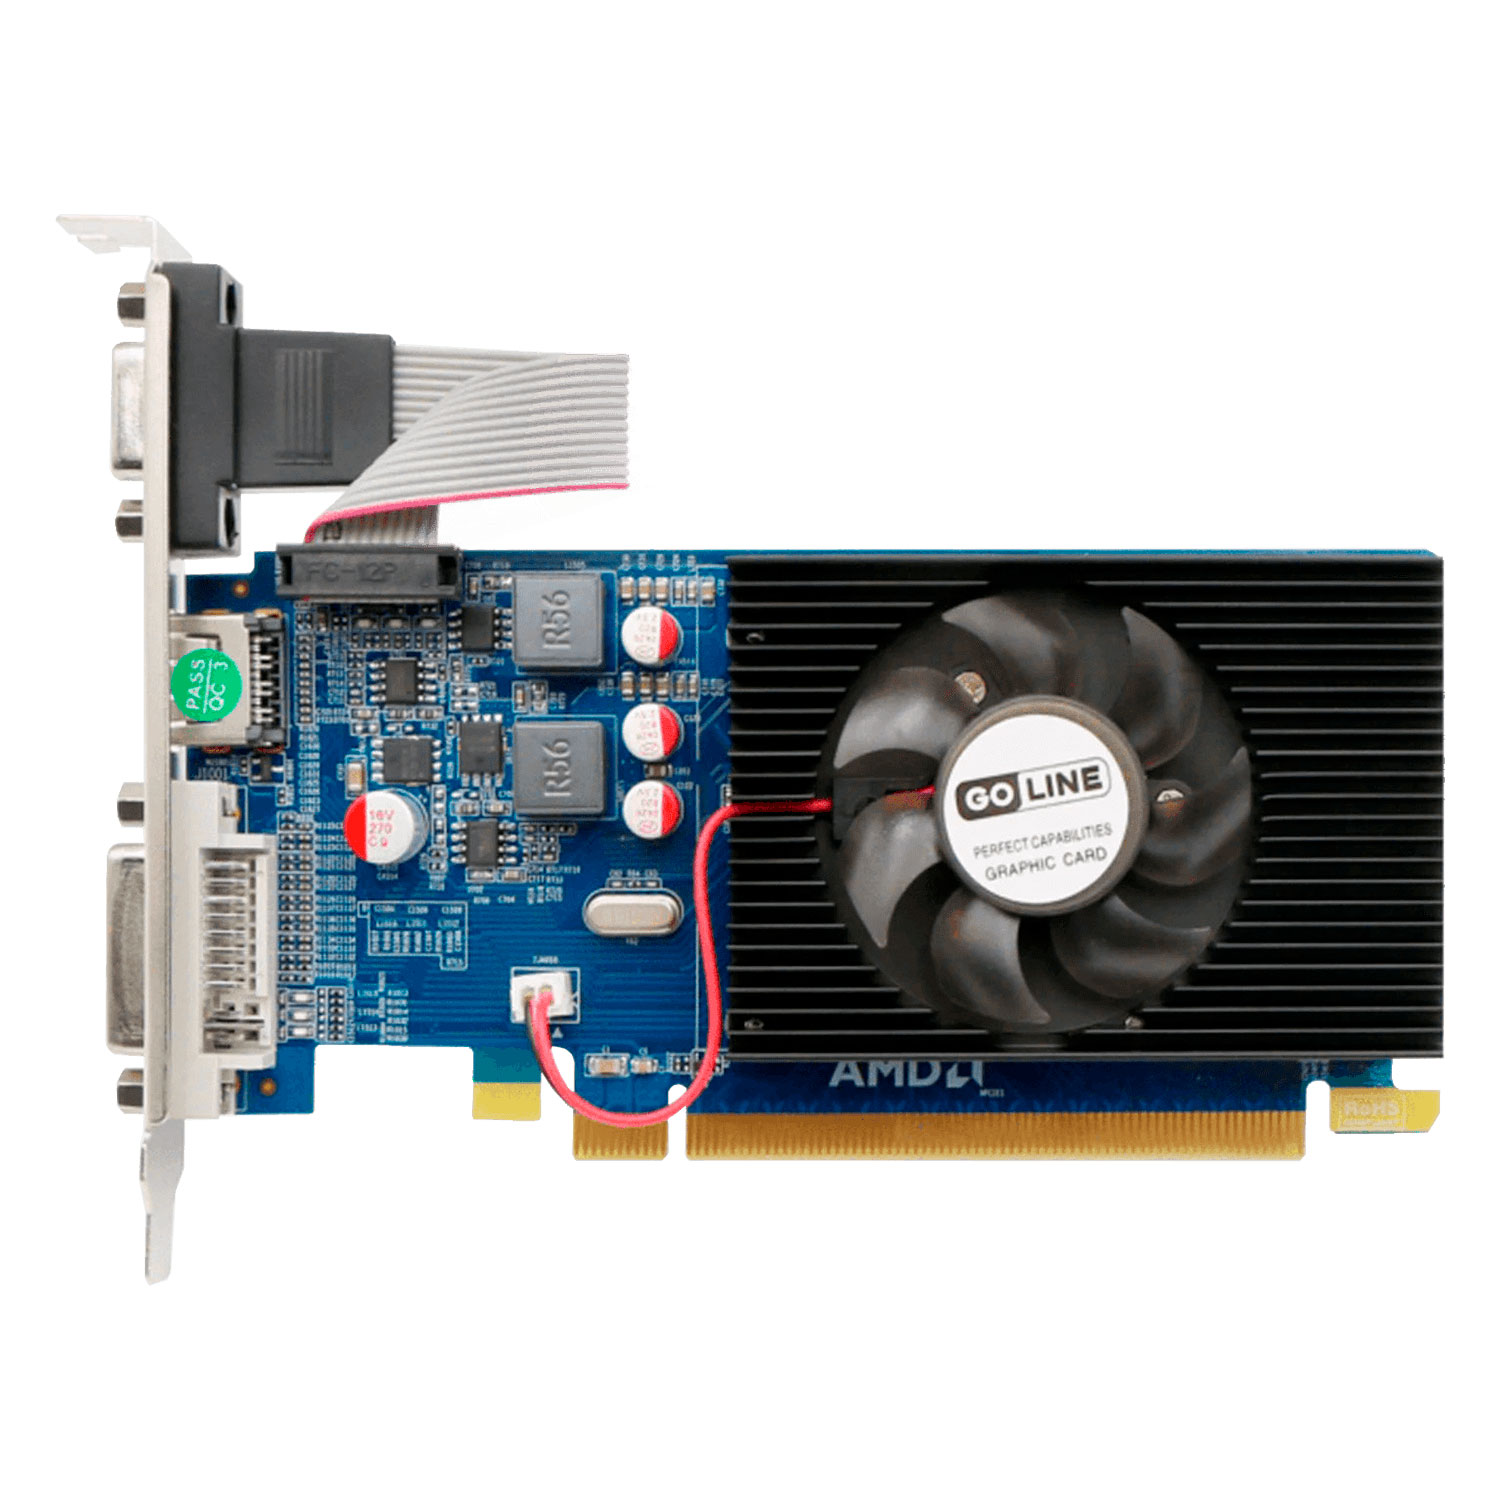 Placa de Vídeo Goline AMD Radeon R5-230 1GB DDR3 - GL-R5-230-1GB (1 Ano de Garantia)